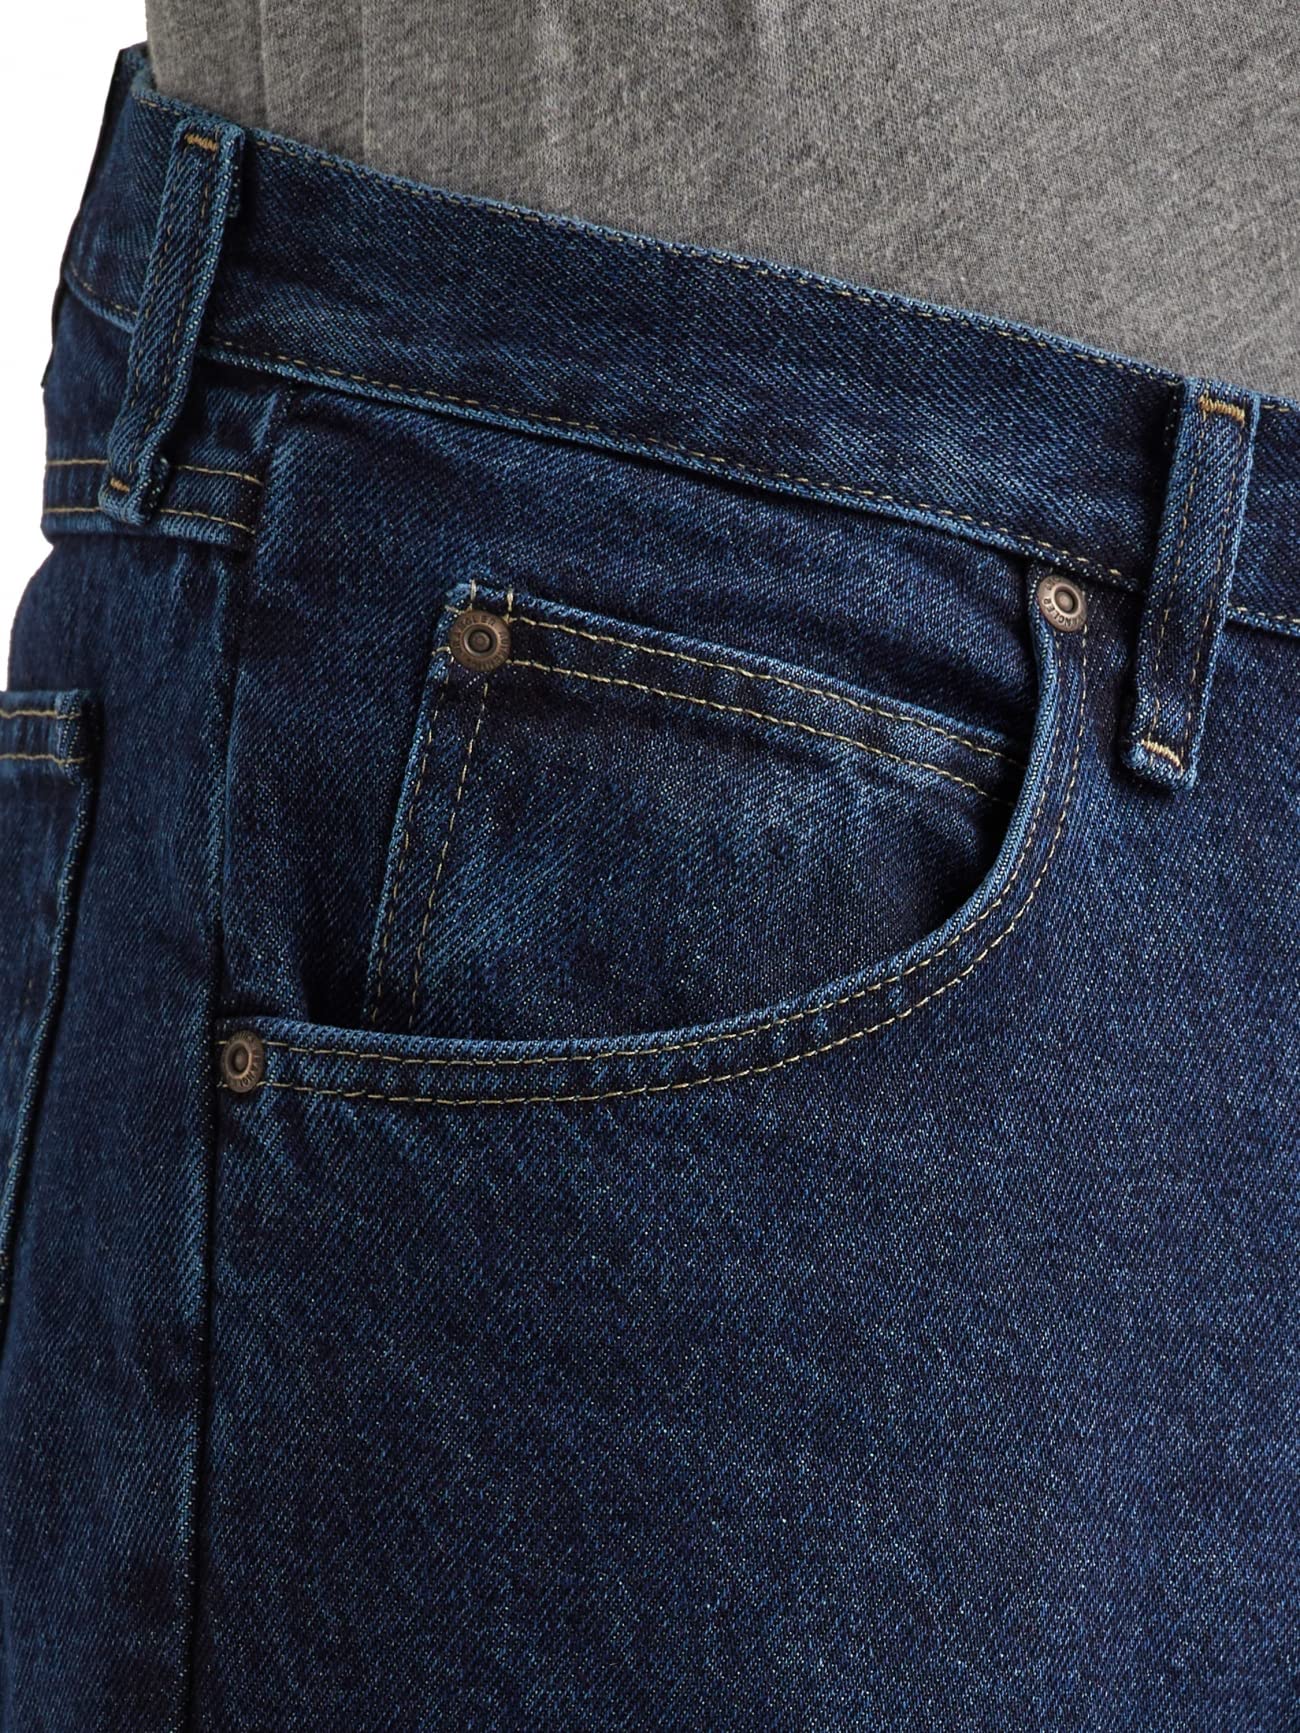 Wrangler Authentics Men's Classic 5-Pocket Relaxed Fit Cotton Jean, Dark Rinse, 35W X 29L